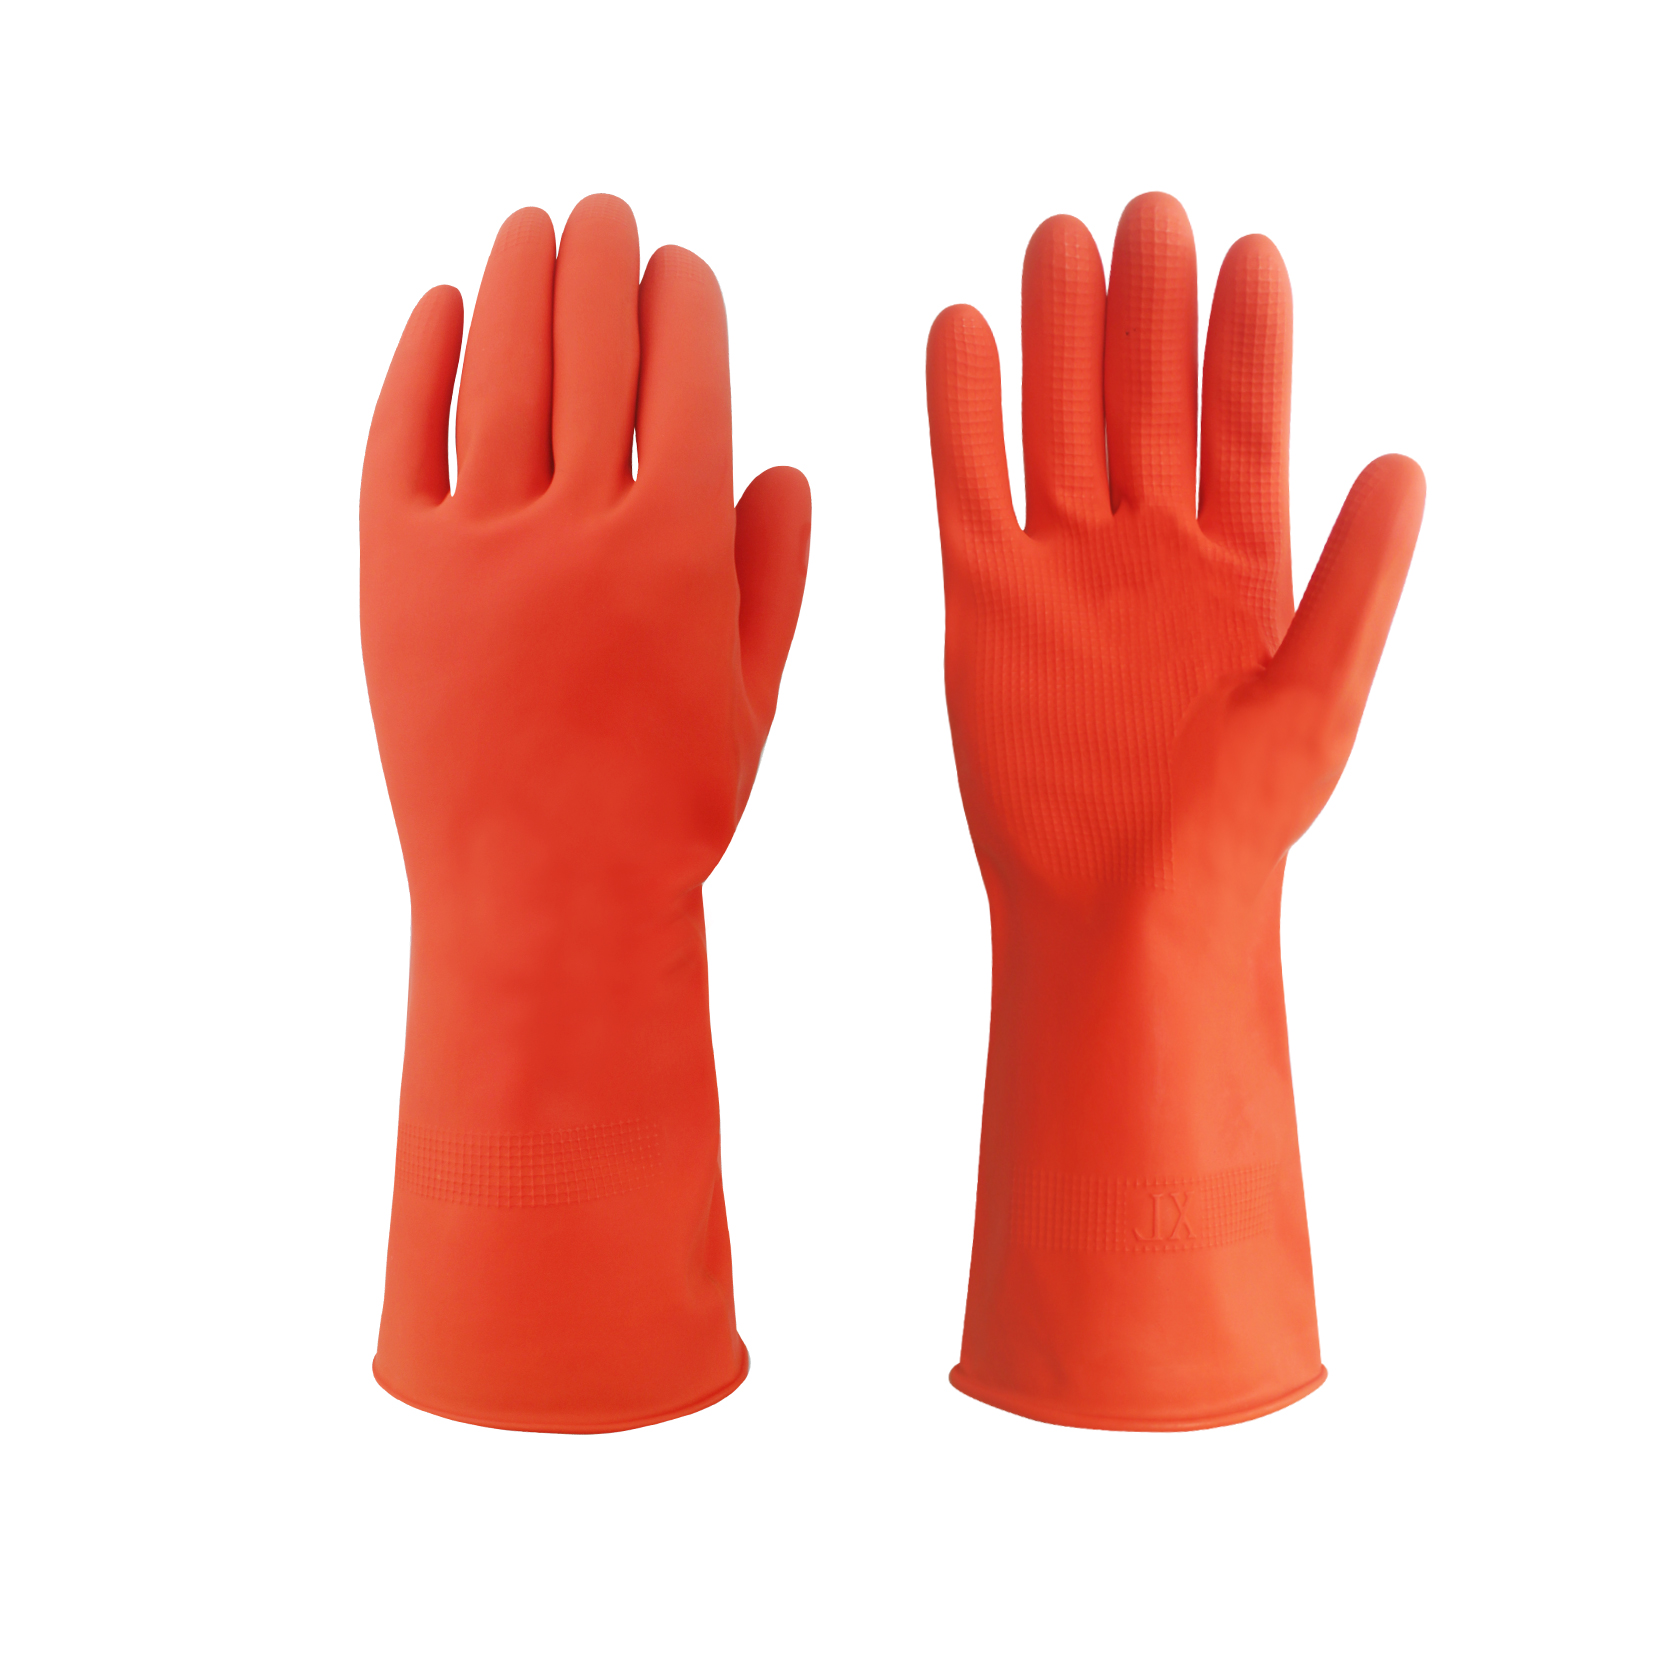 OEM Flock-Lining Household Rubber Gloves Orange Hand Latex Safety Work Gloves for Dishwashing Cleaning